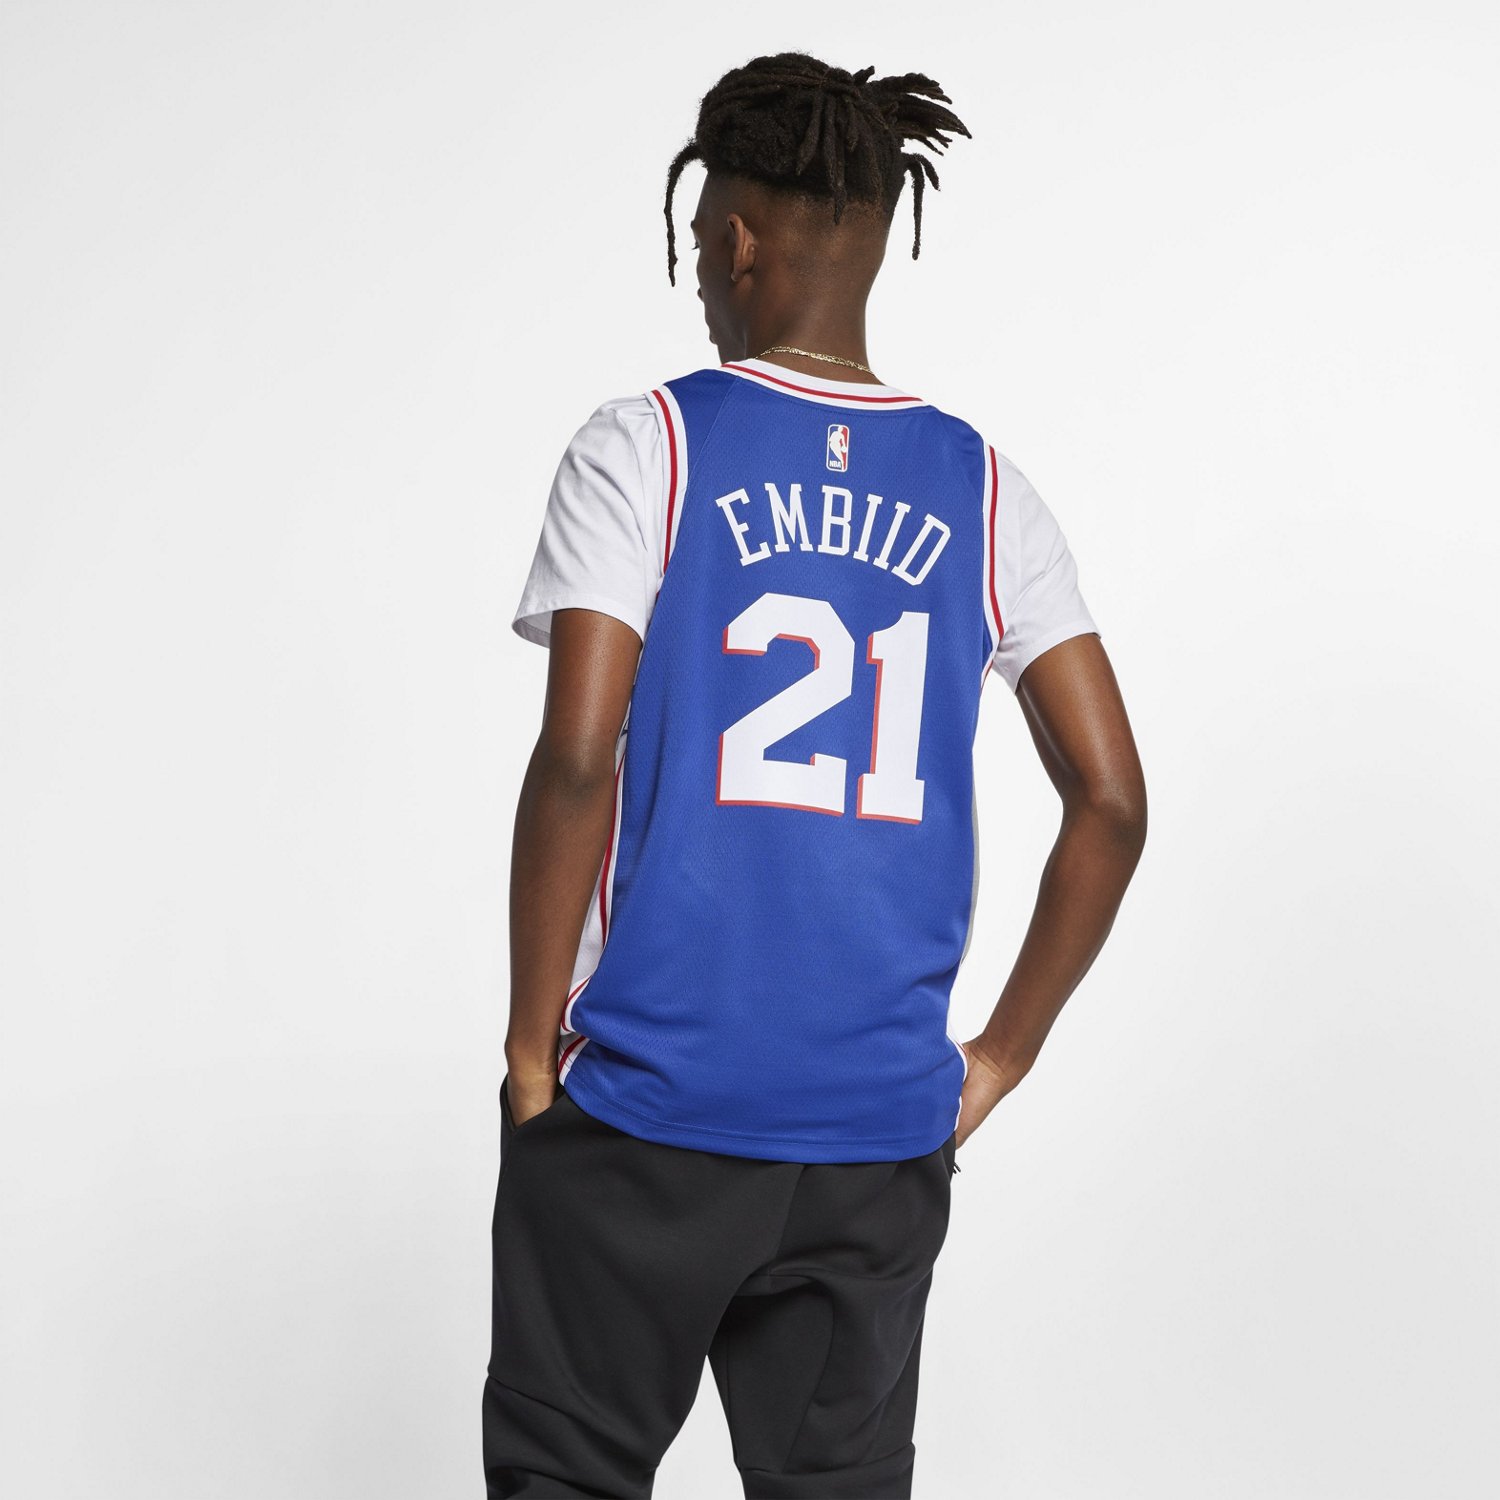 Men's Philadelphia 76ers Joel Embiid Nike Black 2020/21 City